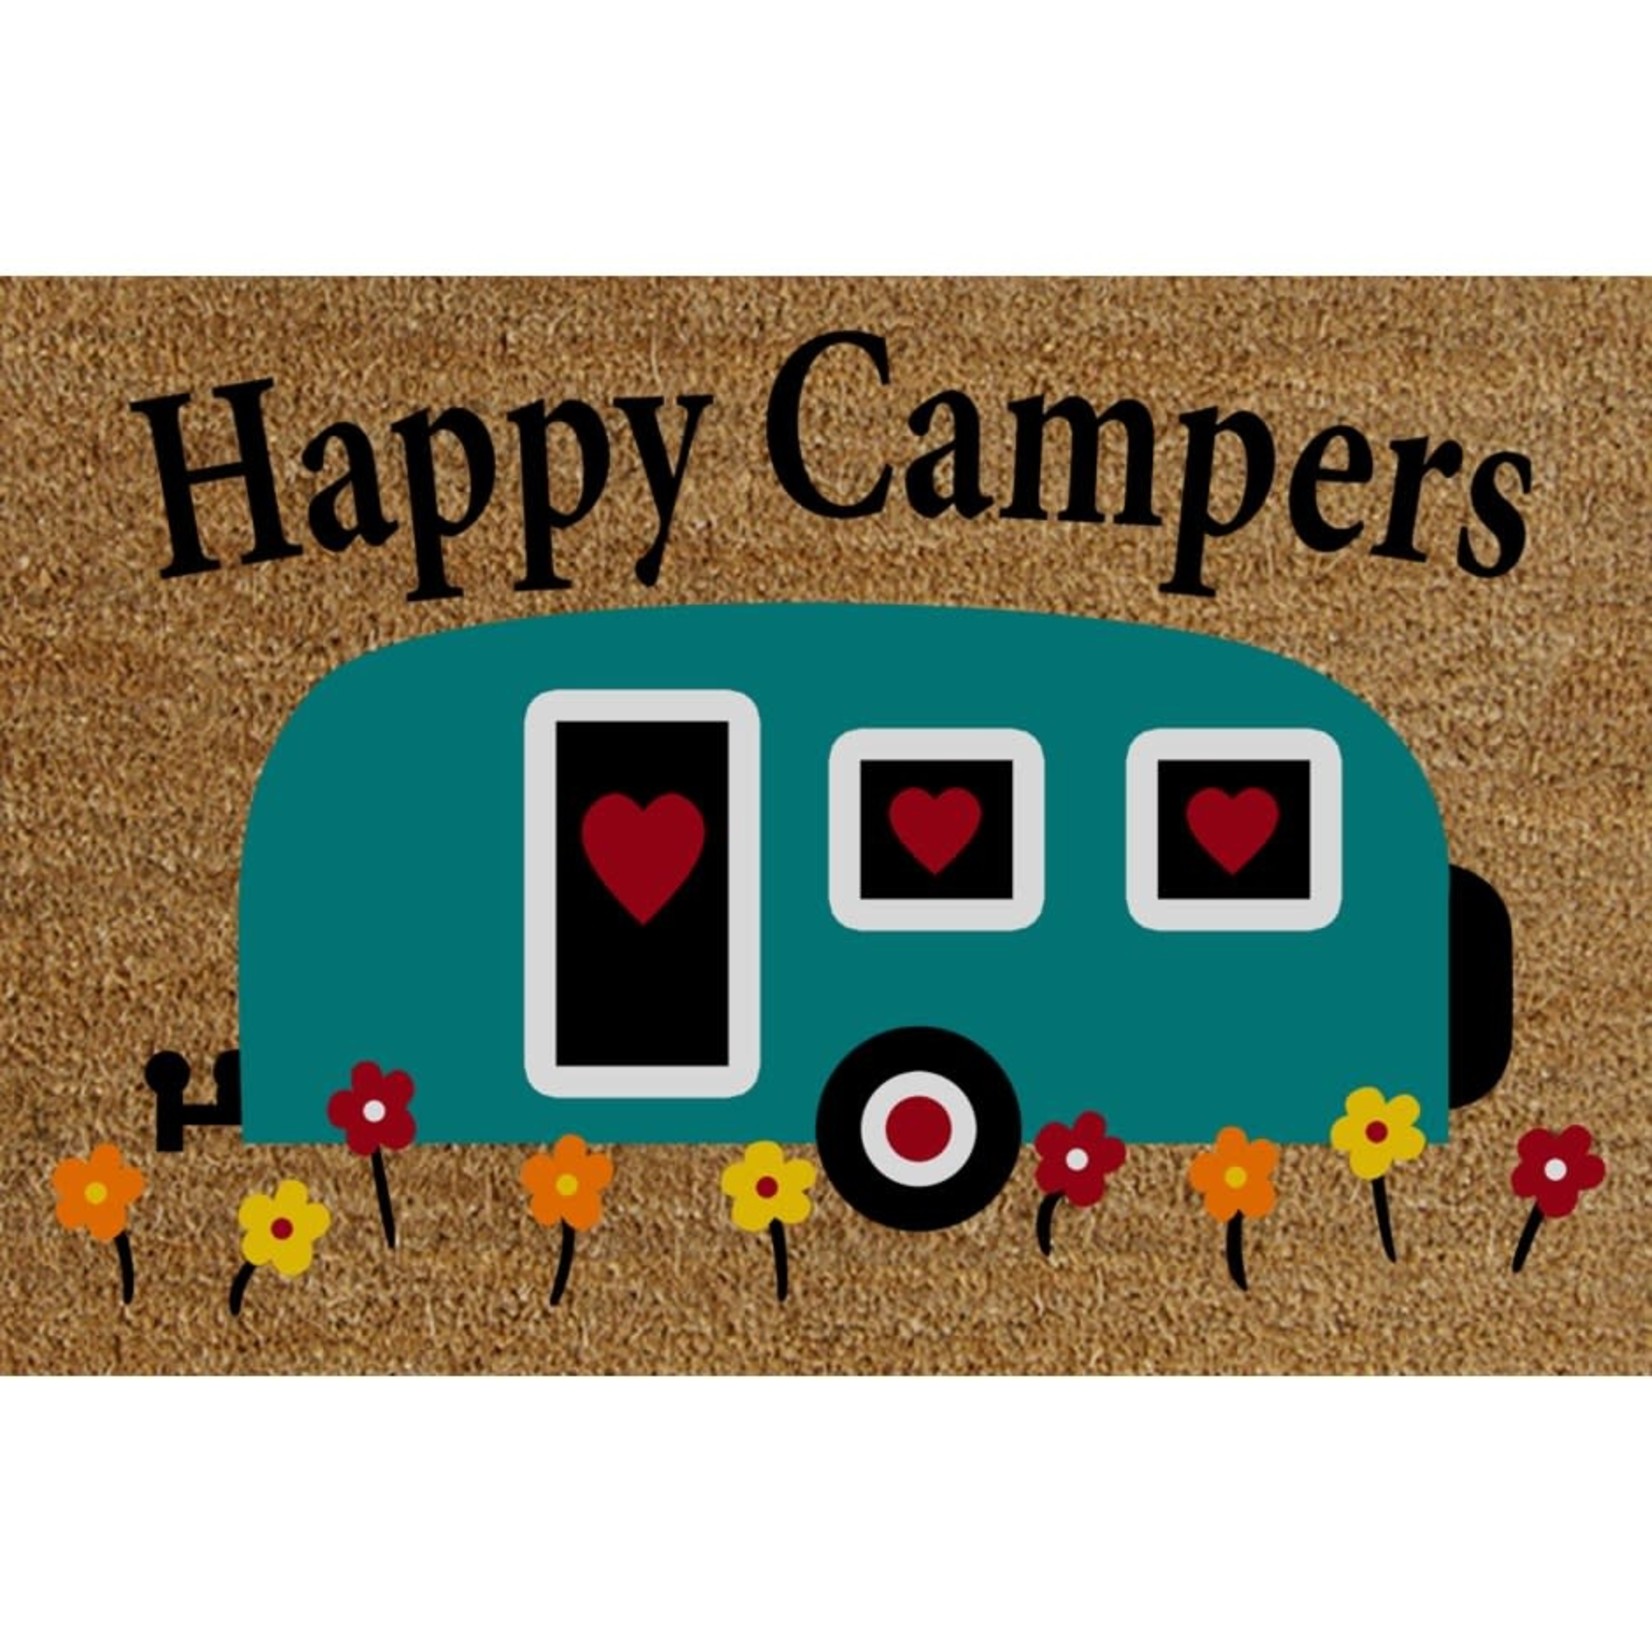 Happy Campers Doormat